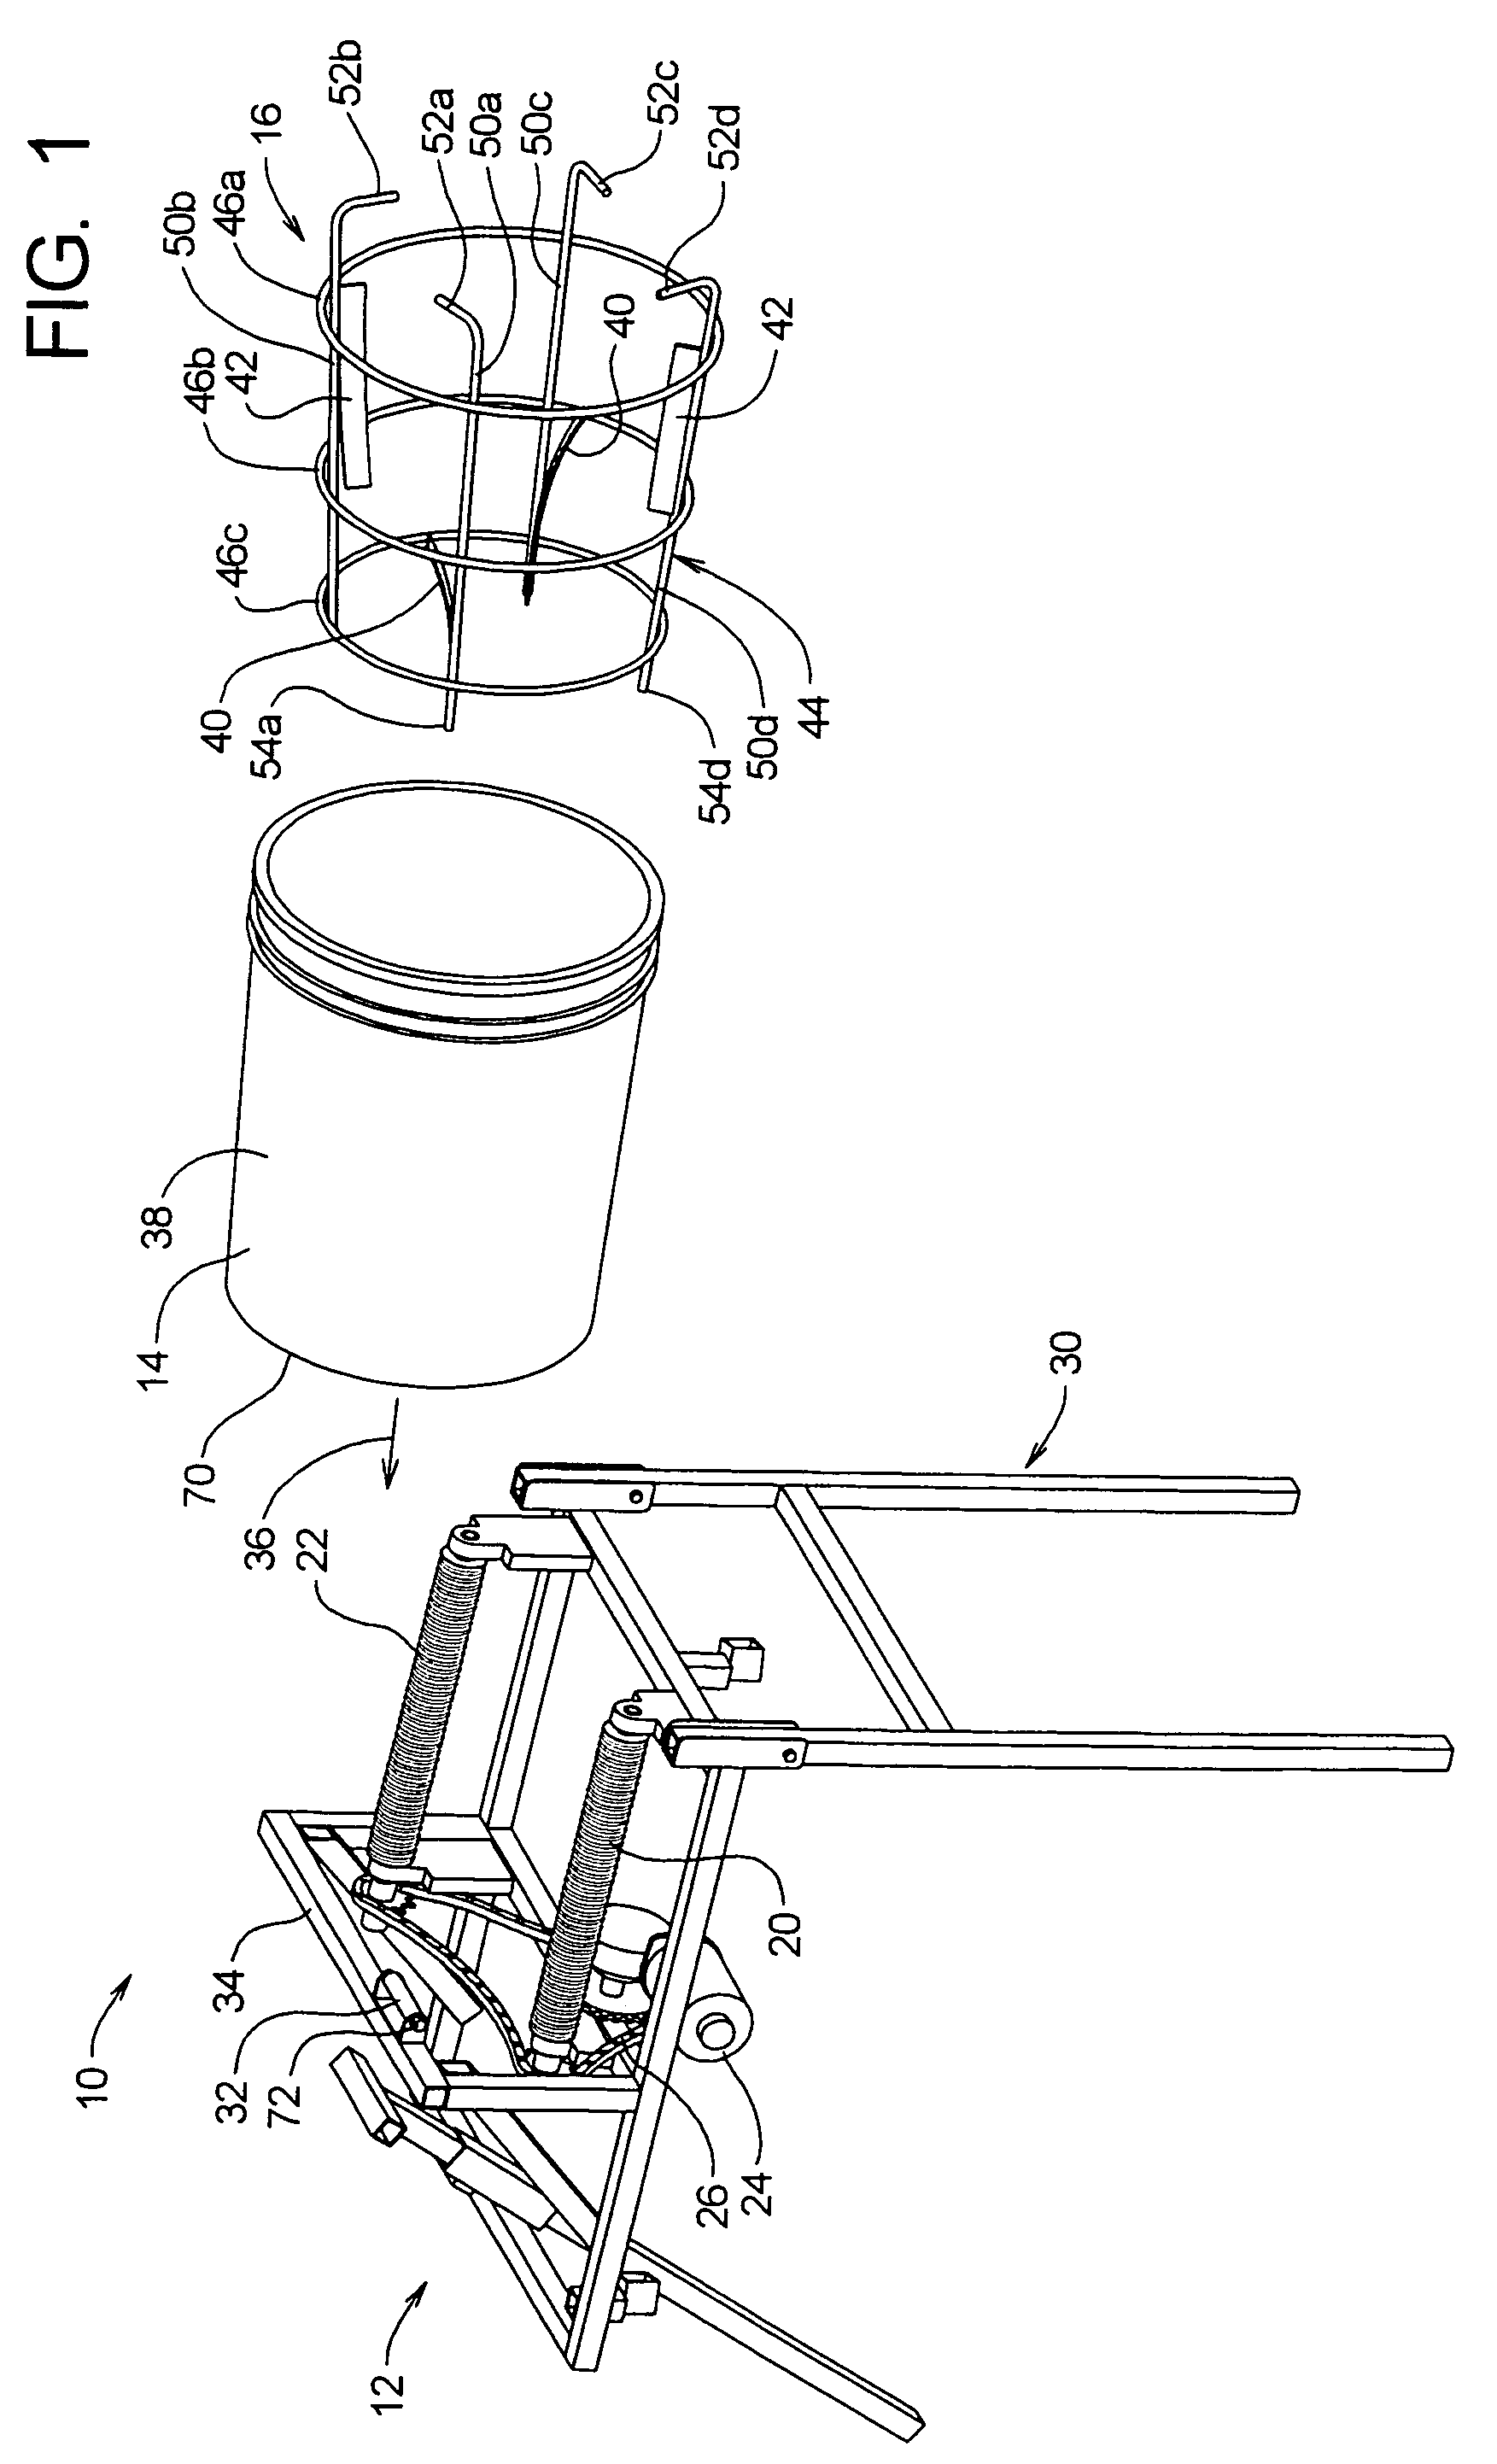 Portable mixing apparatus